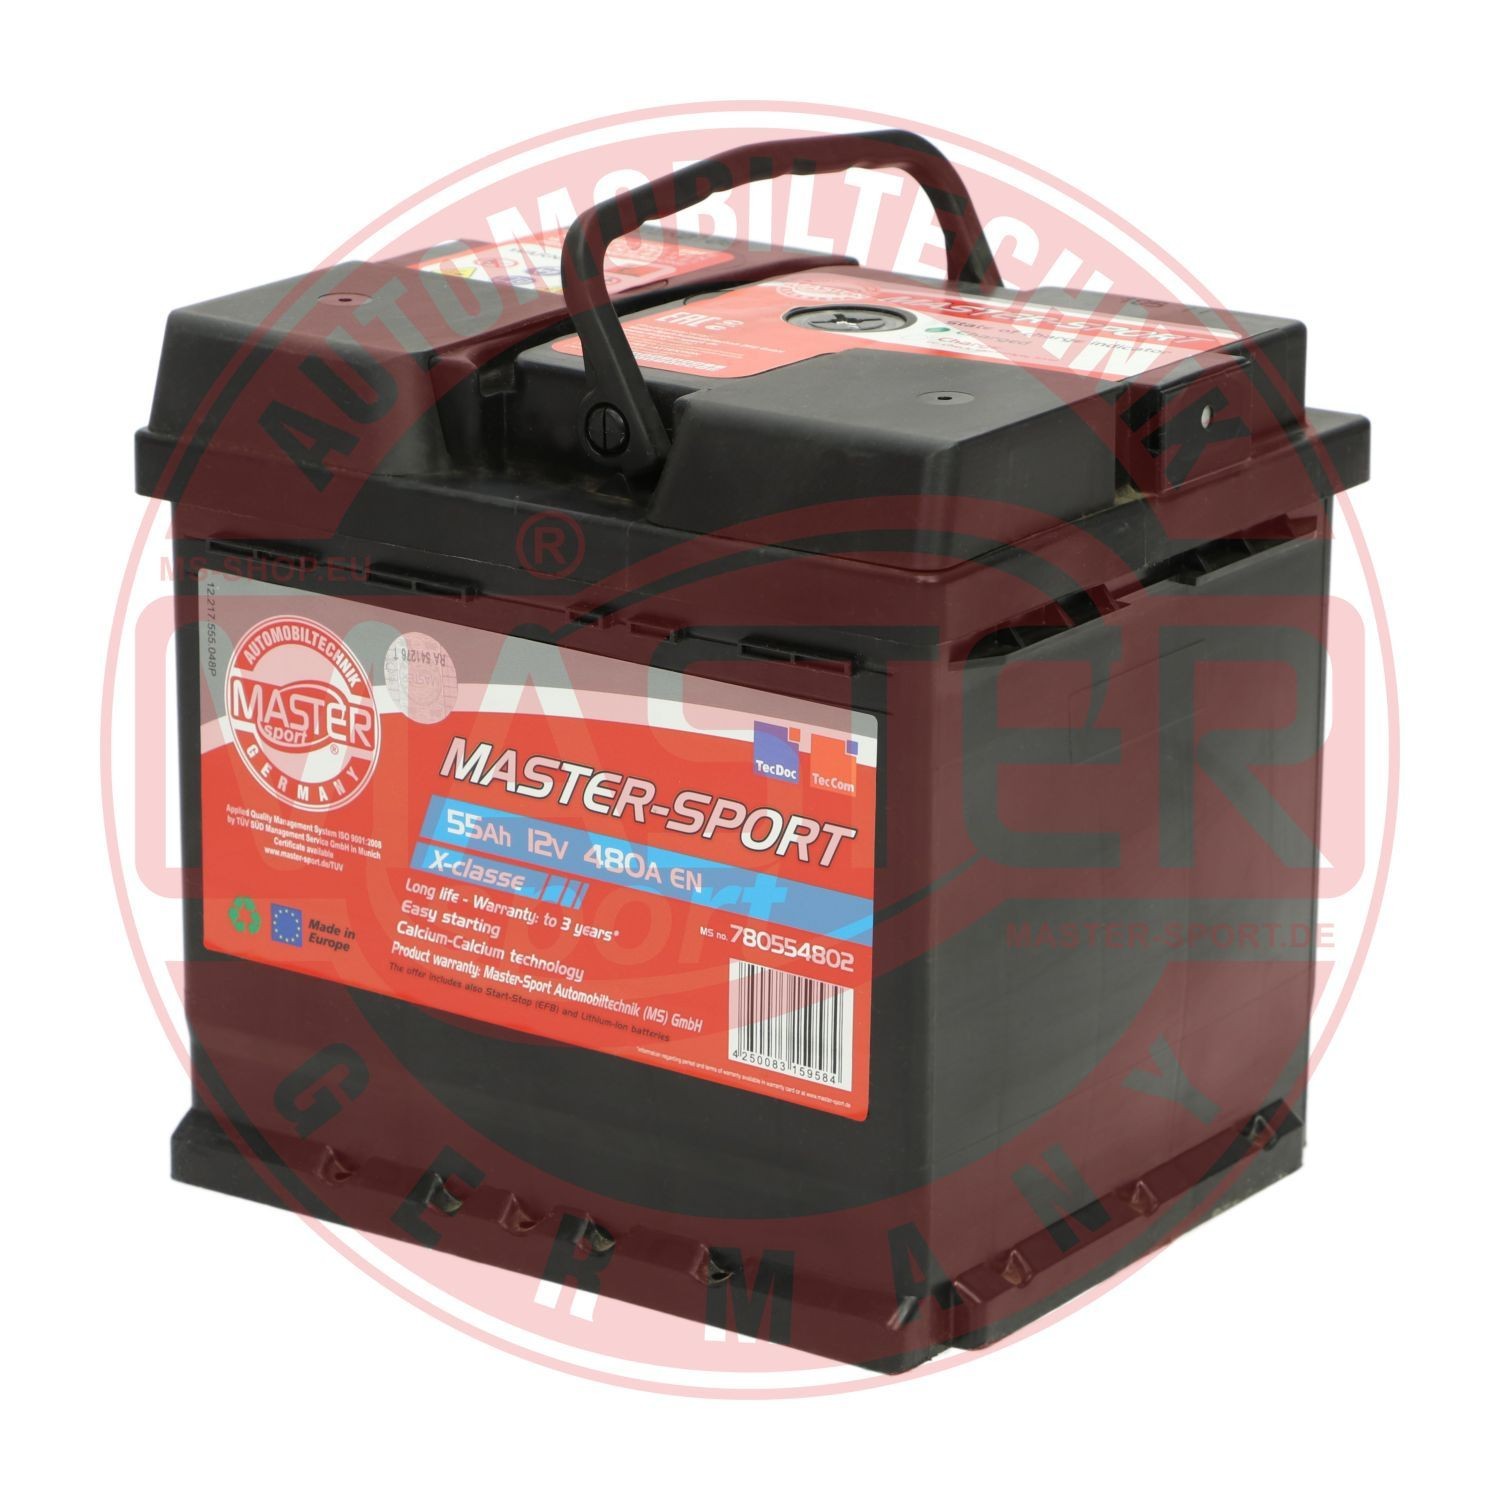 Auxiliary battery MASTER-SPORT 12V 55Ah 480A B13 L1 Lead-acid battery - 780554802